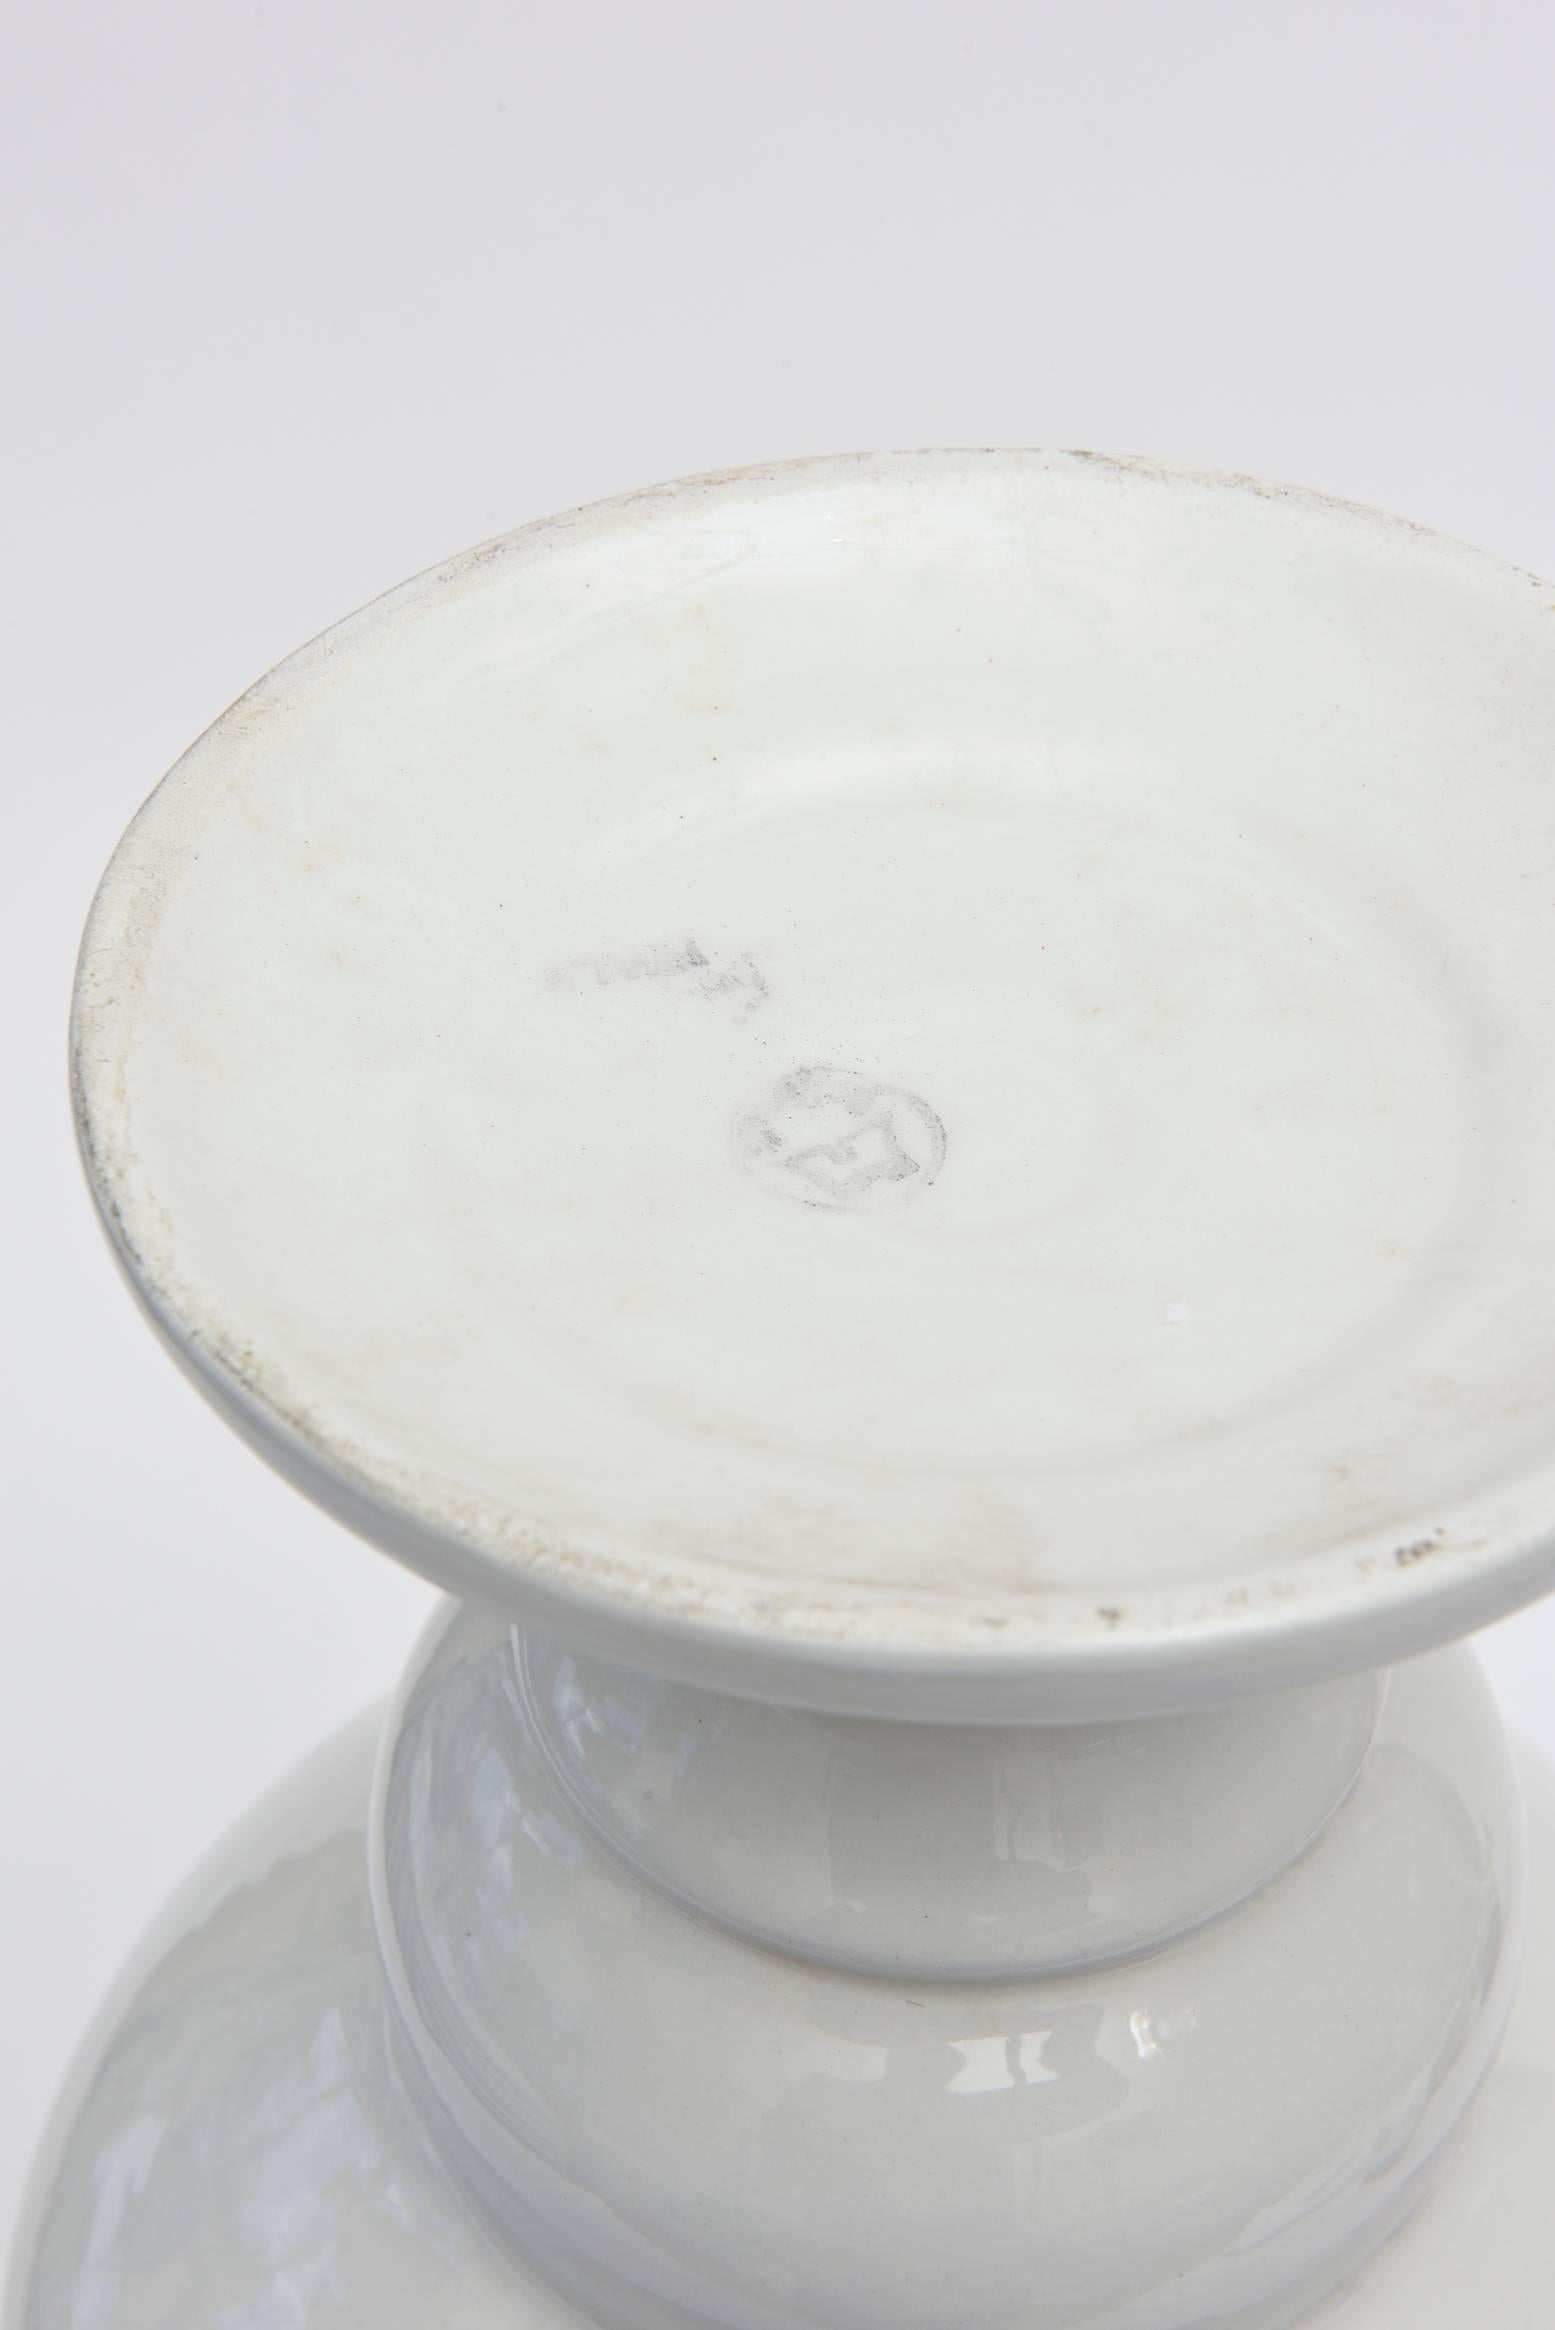 Sculptural Sensual Italian Ceramic Vessel, Vase or Object 4